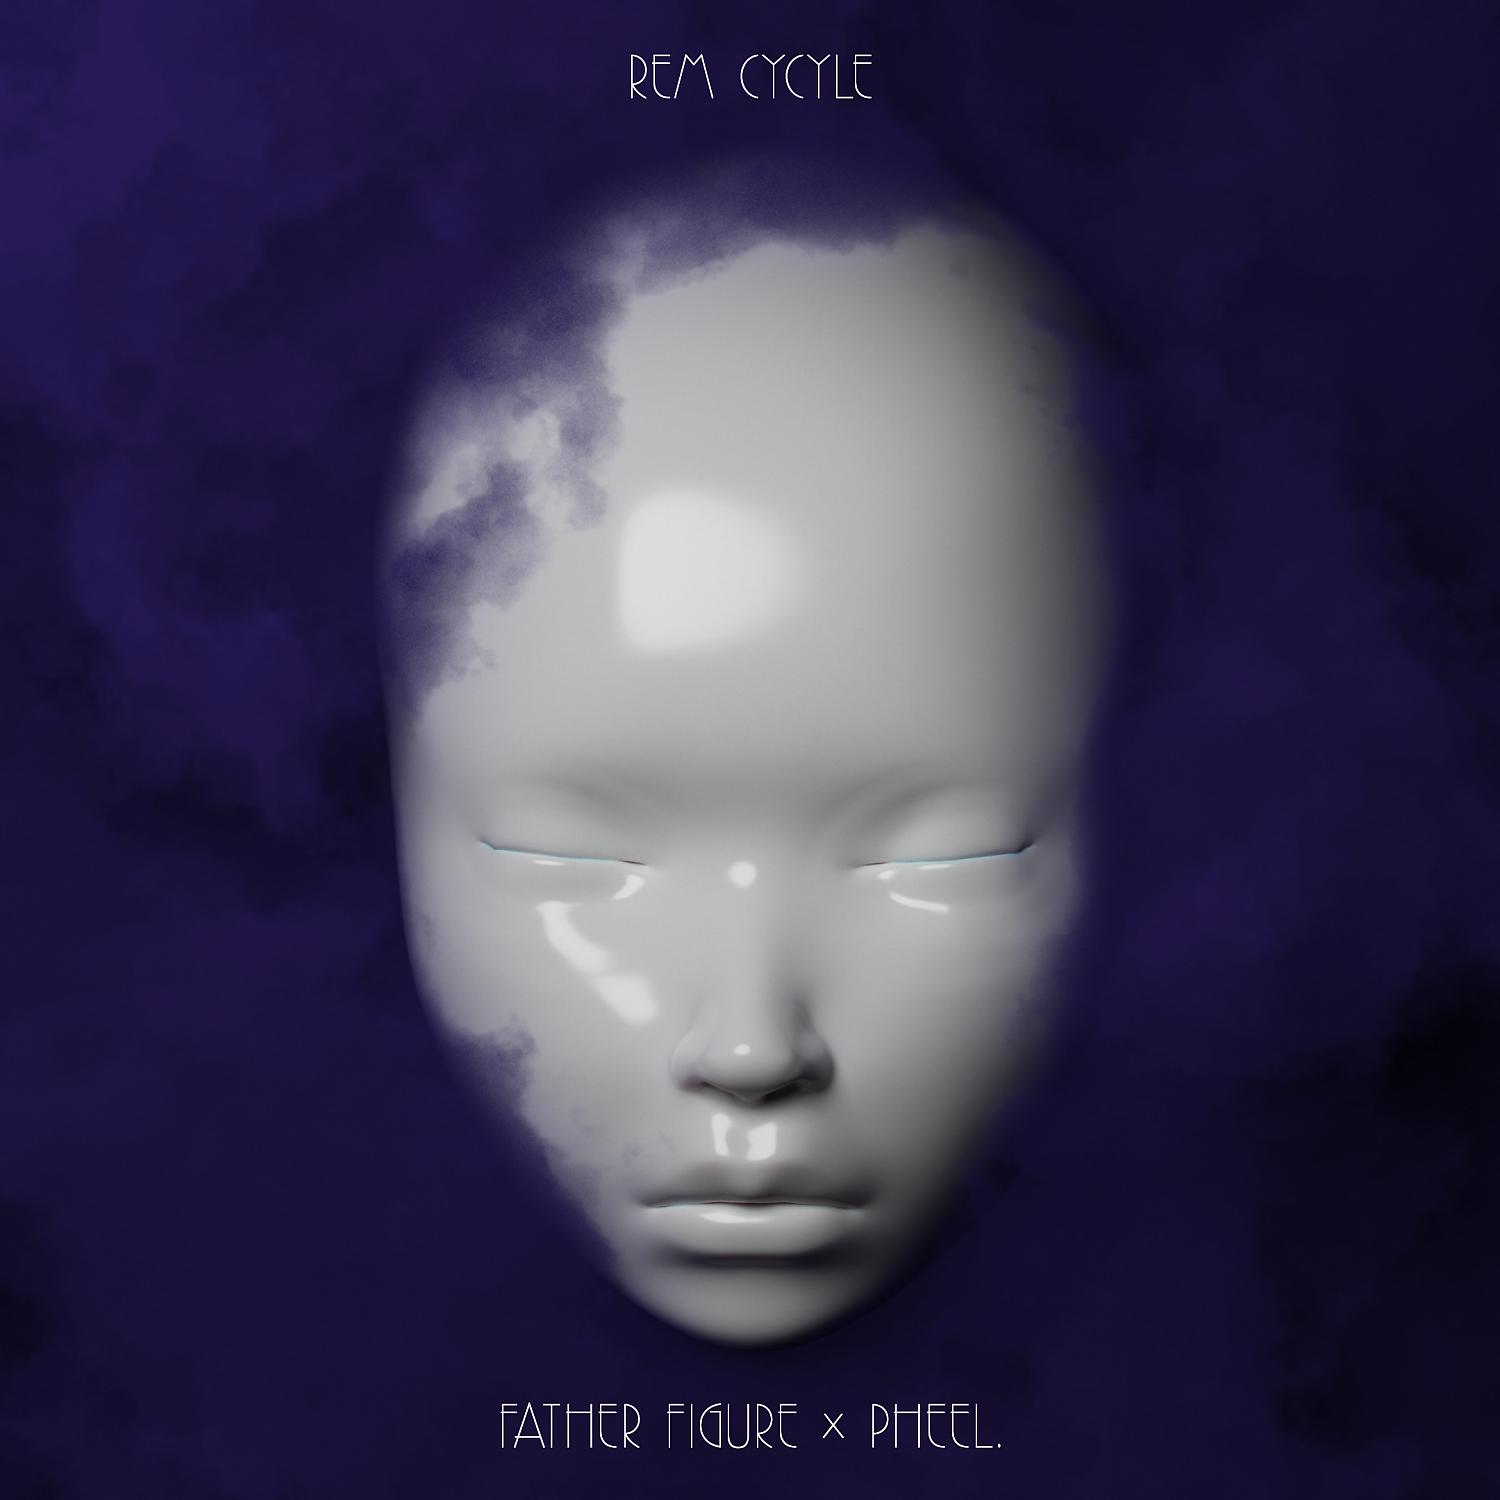 Постер альбома REM Cycle